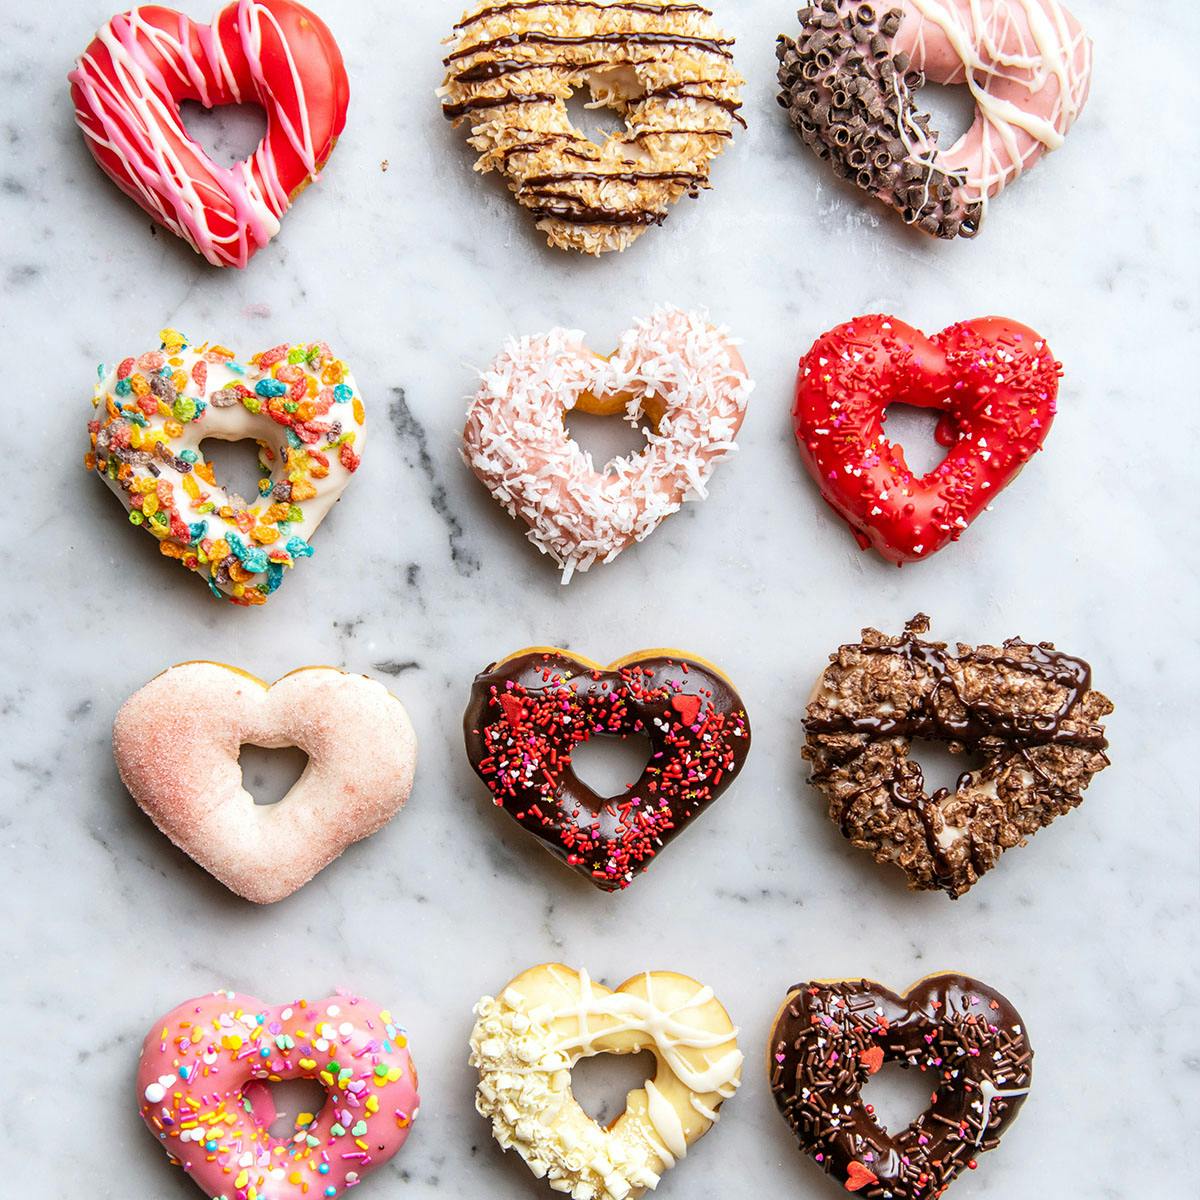 https://goldbelly.imgix.net/uploads/showcase_media_asset/image/156477/Angel-Food-Bakery-Dozen-Hearts-2.jpg?ixlib=rails-3.0.2